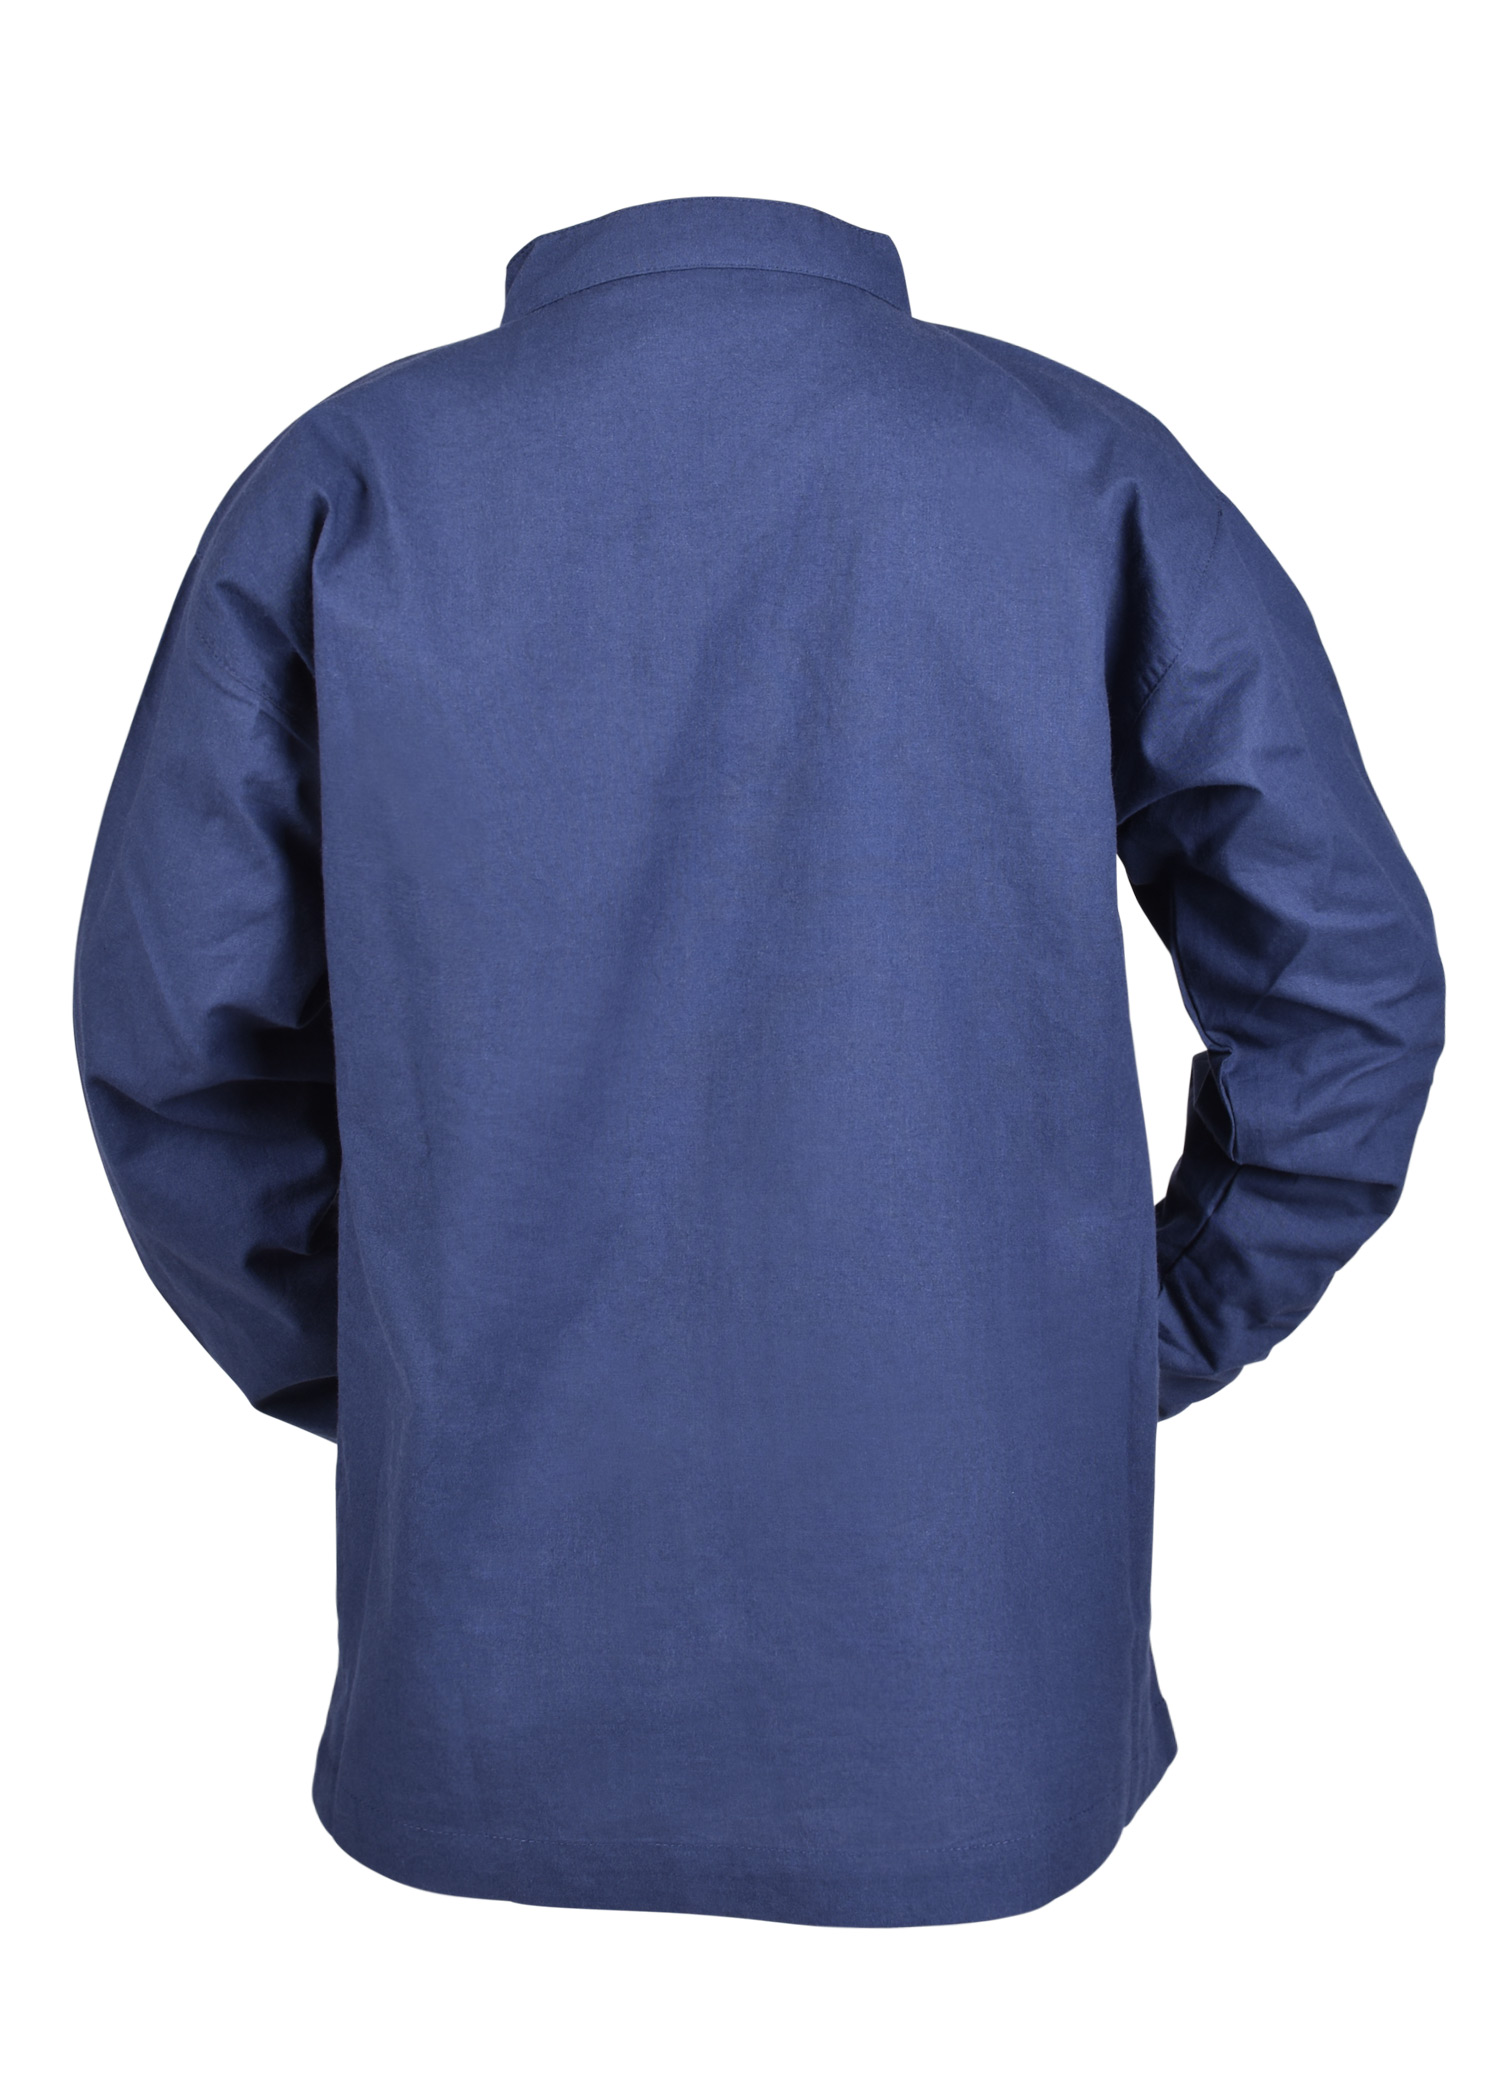 Medieval Shirt Colin for Children, blue | Battle-Merchant - We supply ...